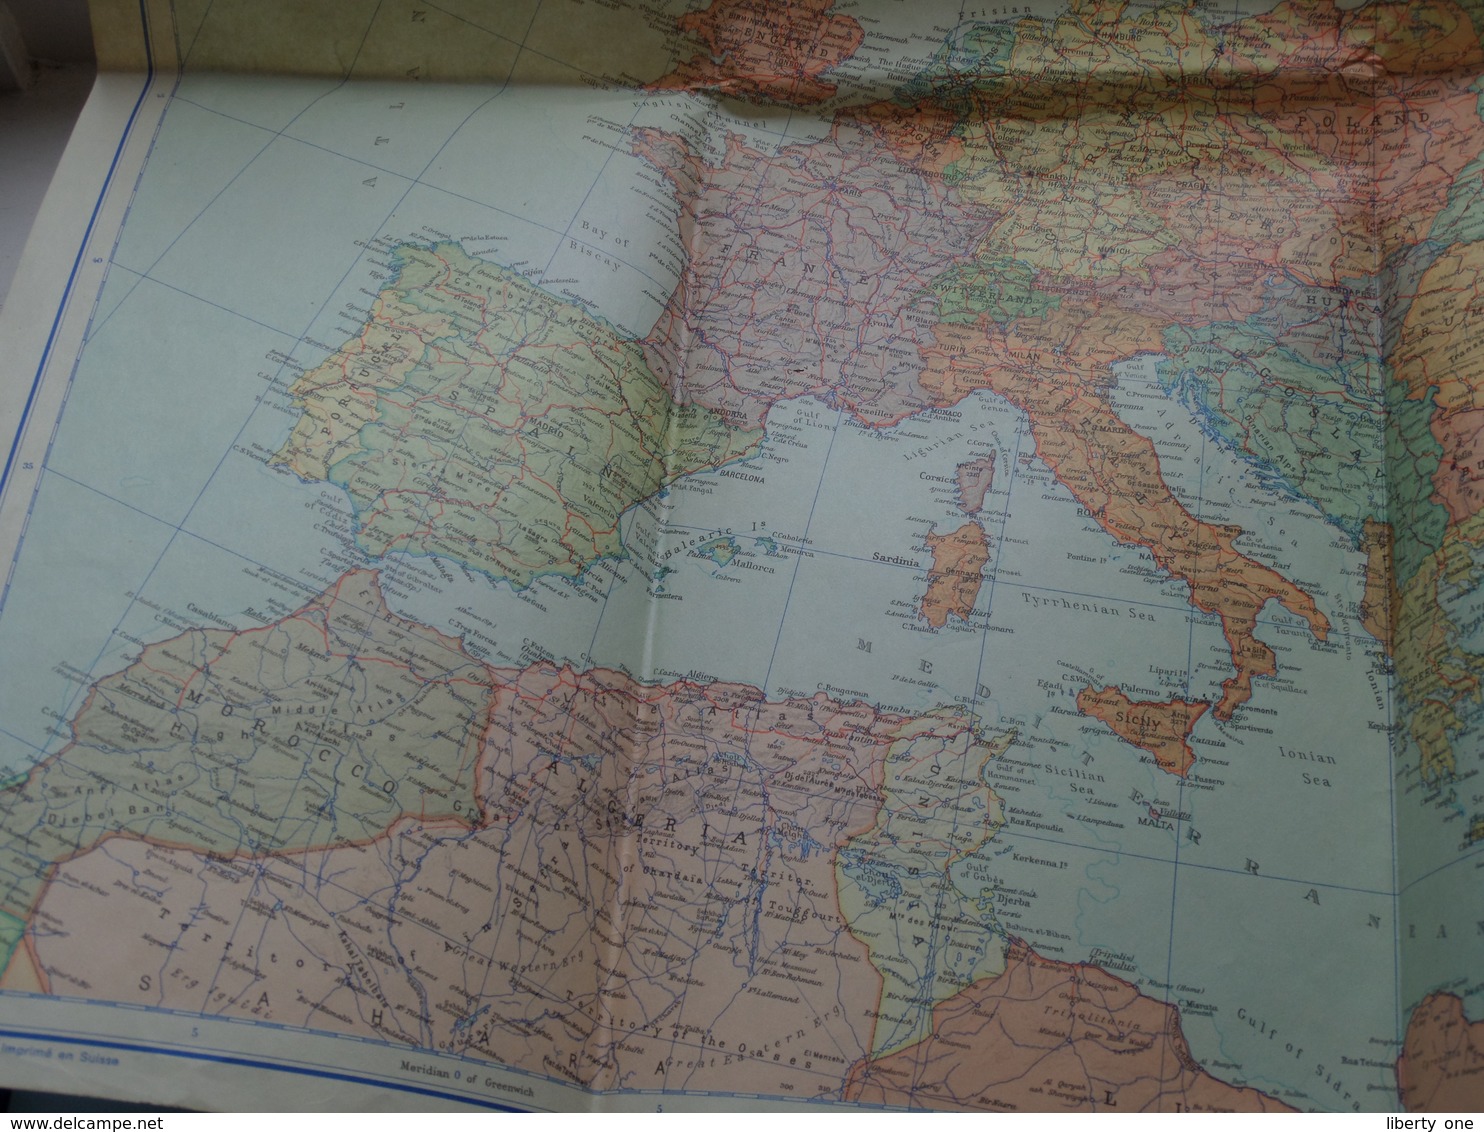 Carte D'Europe LAVA Europakaart : Scale 1 : 10.000.000 Miles / Printed In Switzerland KÜMMERLY & FREY Berne ! - Europe